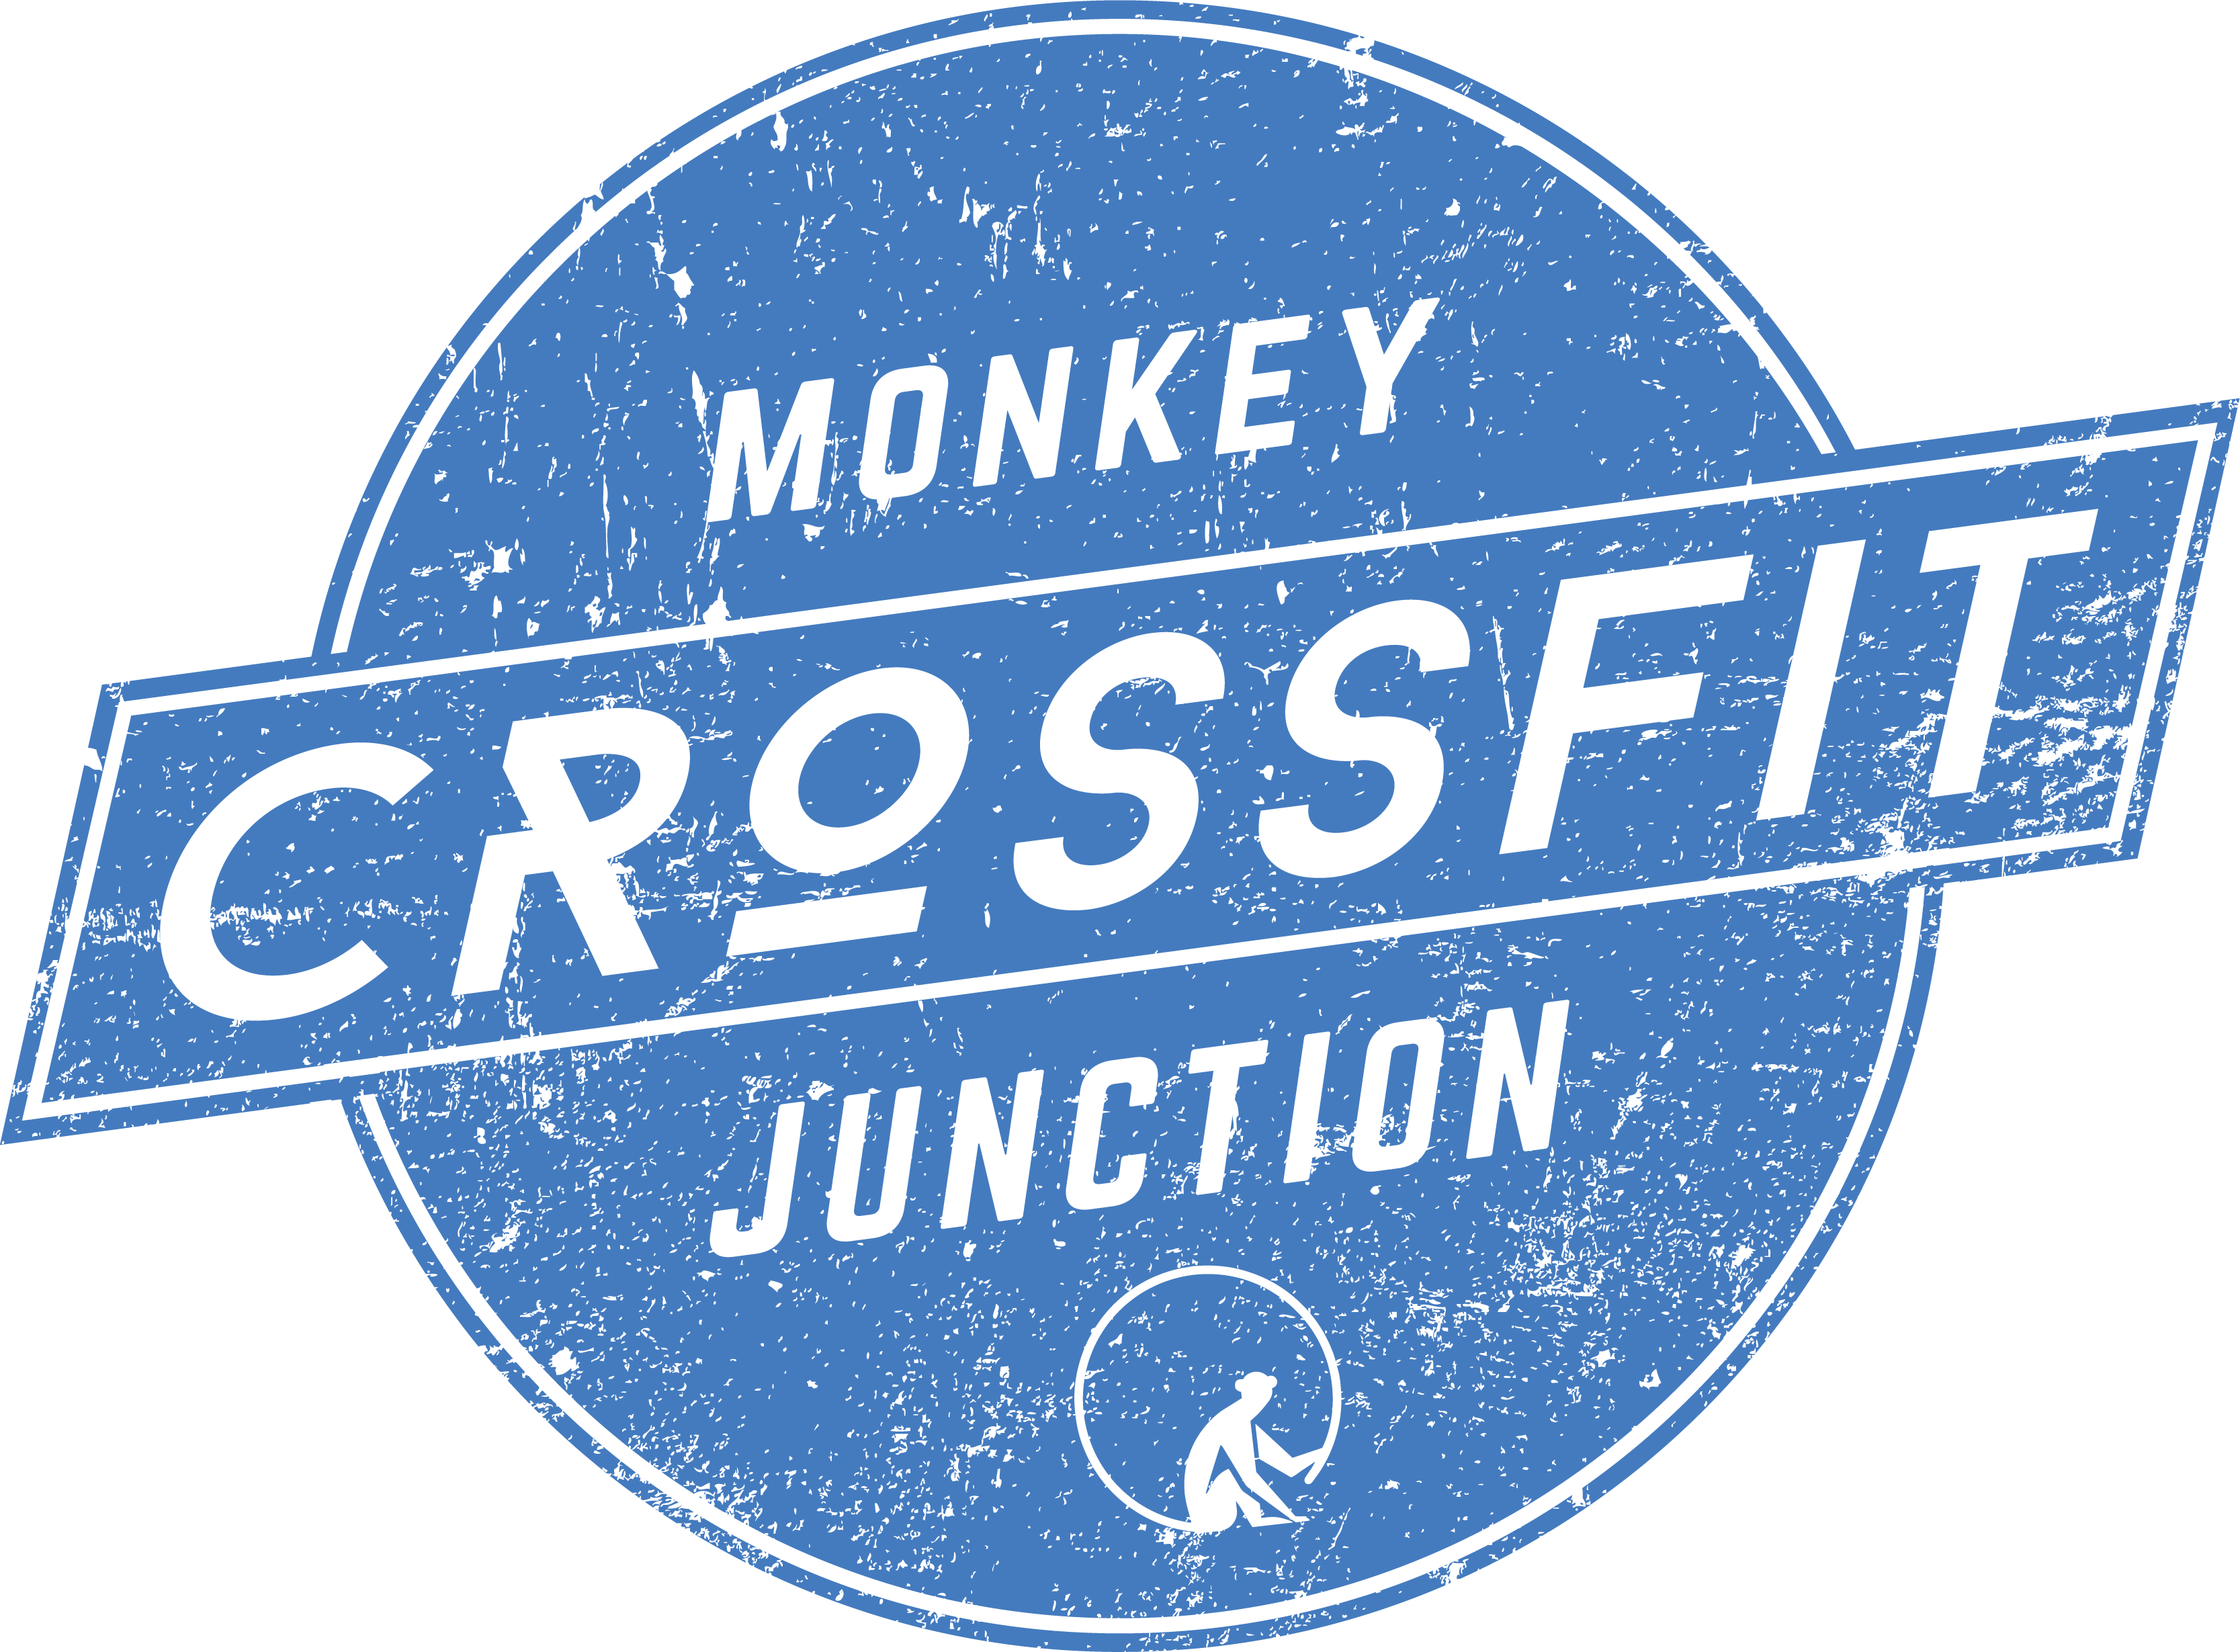 Monkey Junction CrossFit